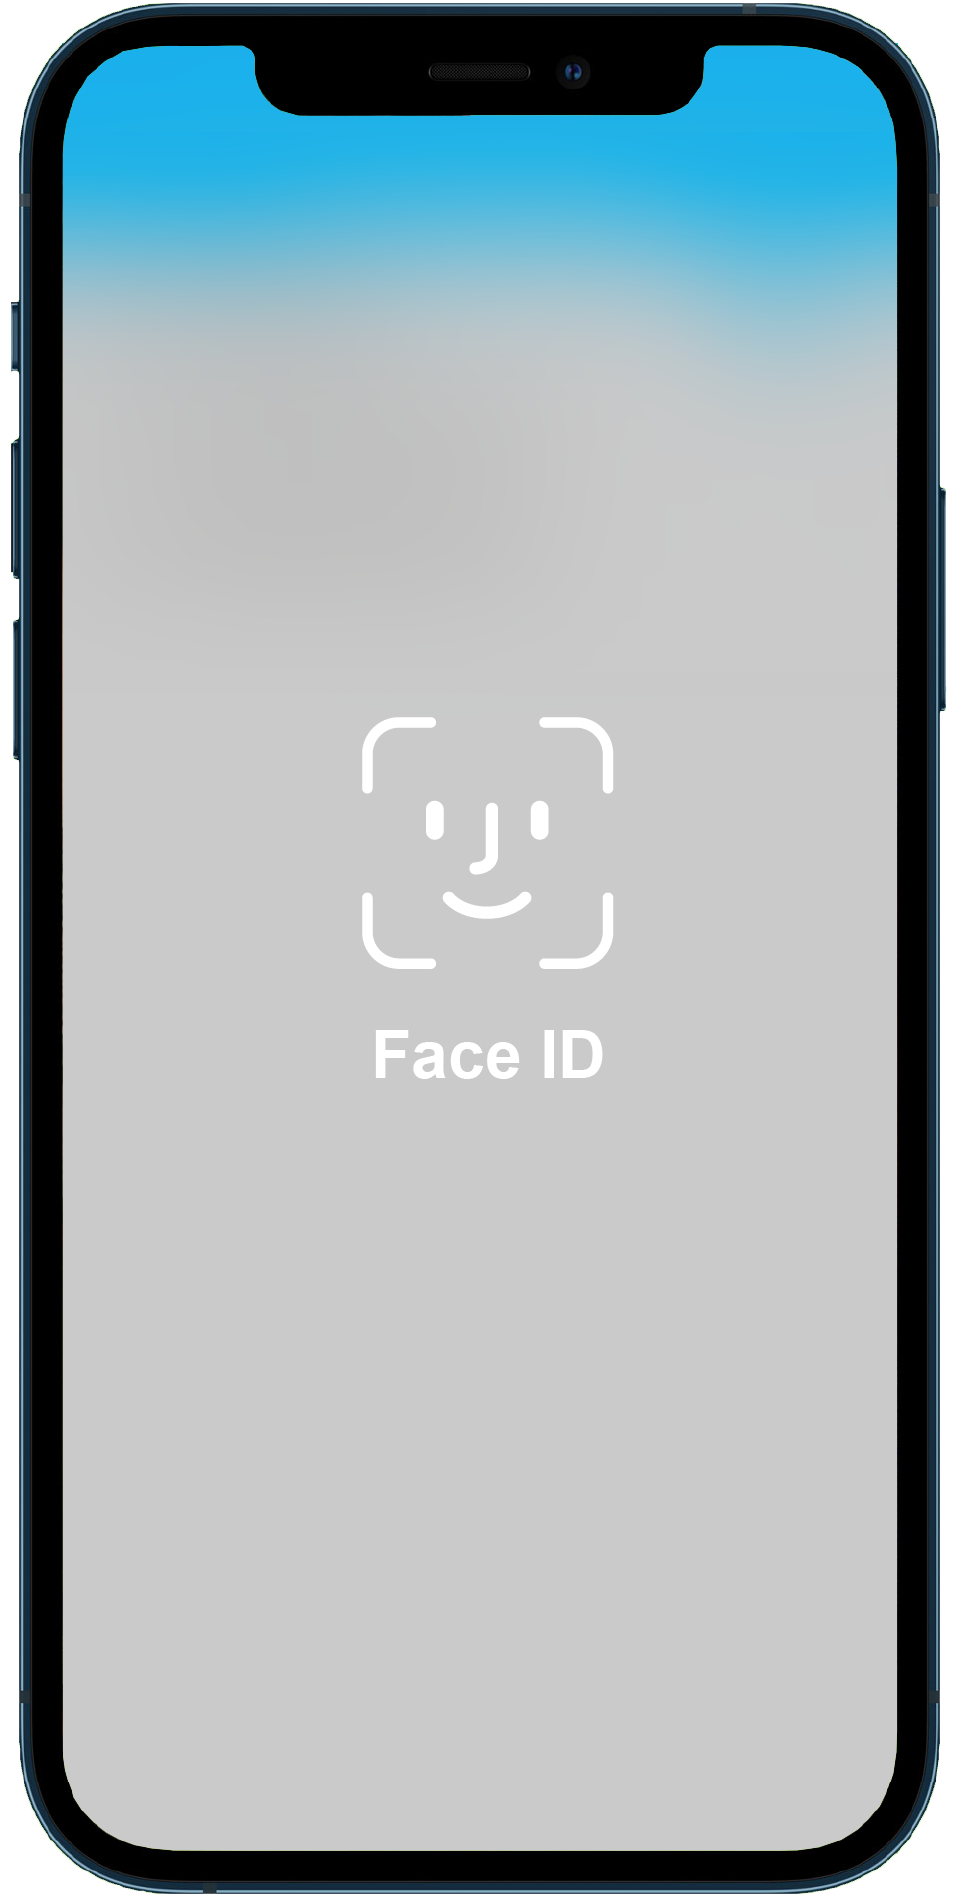 activate Biometric Credential Authentication